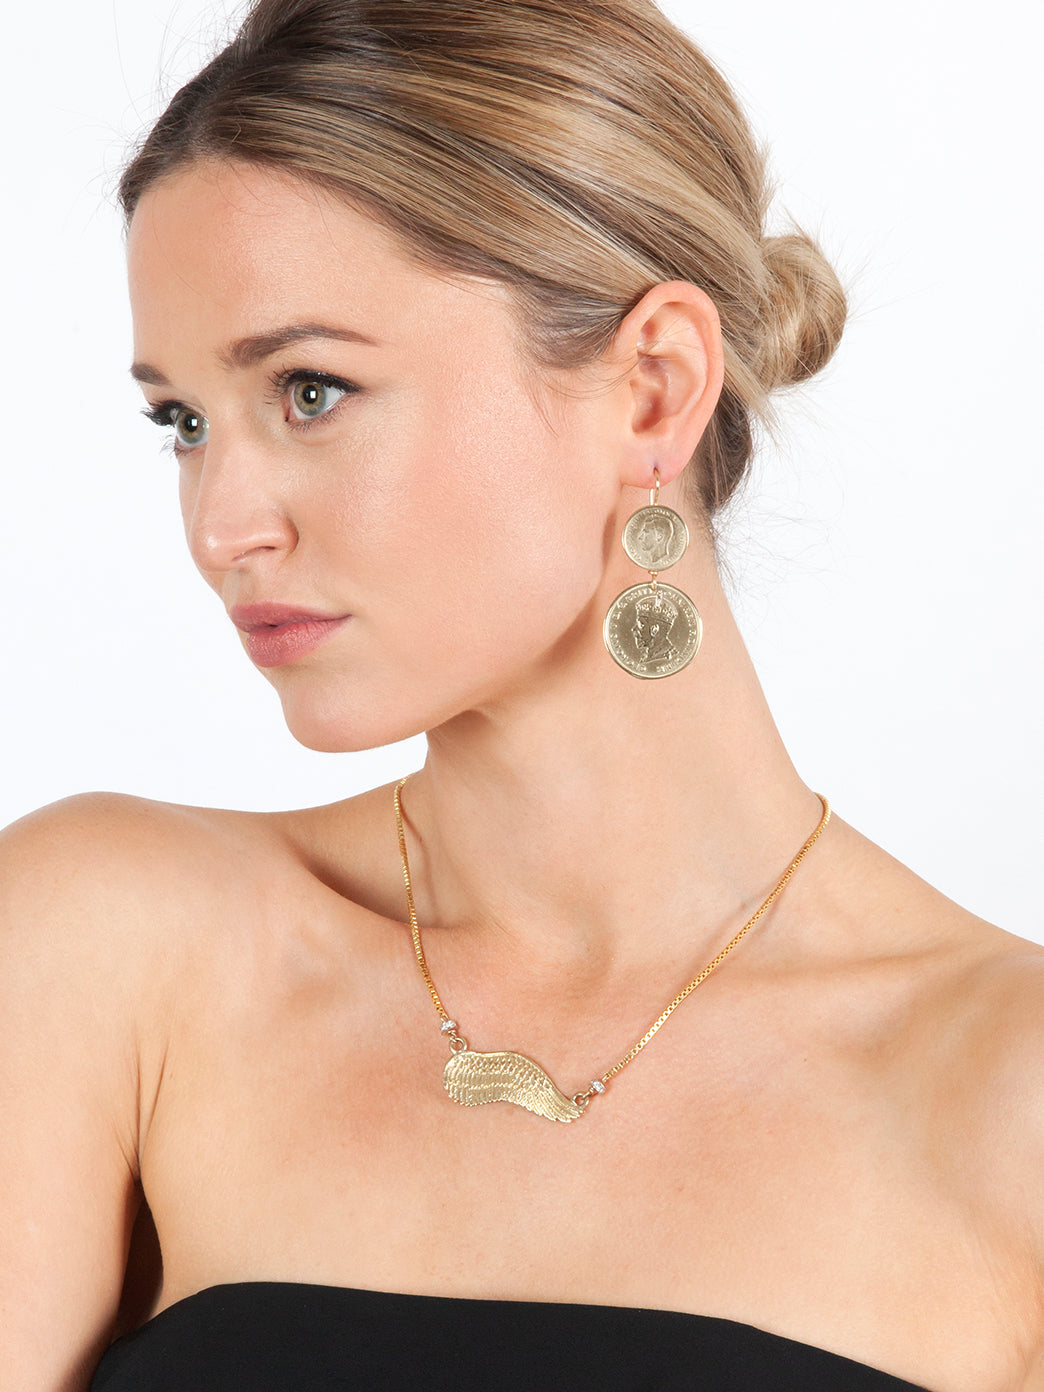 Fiorina Jewellery Gold Double Coin Earrings Model